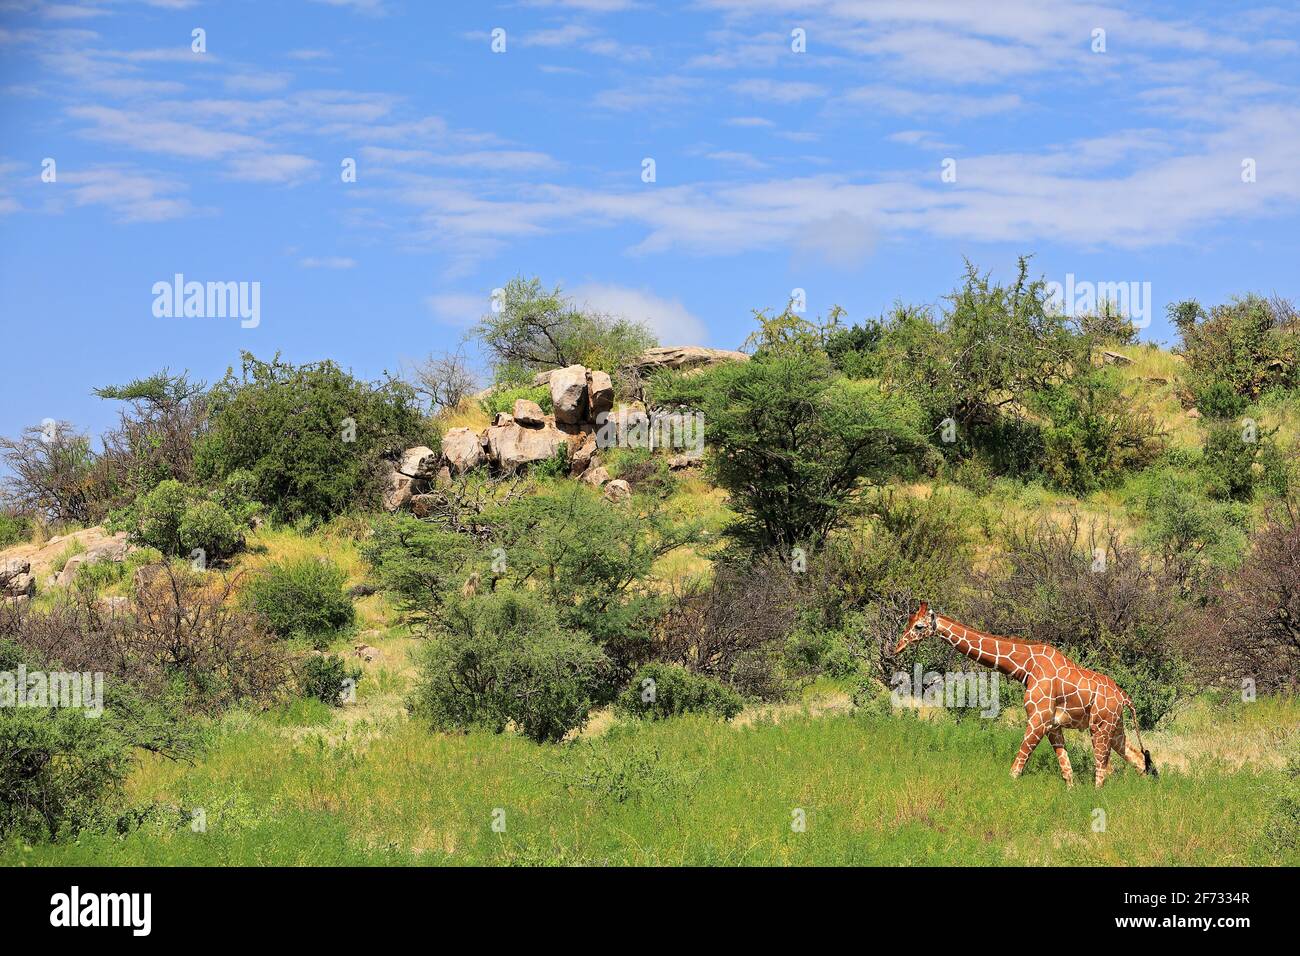 Reticulated giraffe (Giraffa reticulata), savannah, mountain, stones, Samburu National Reserve, Kenya Stock Photo